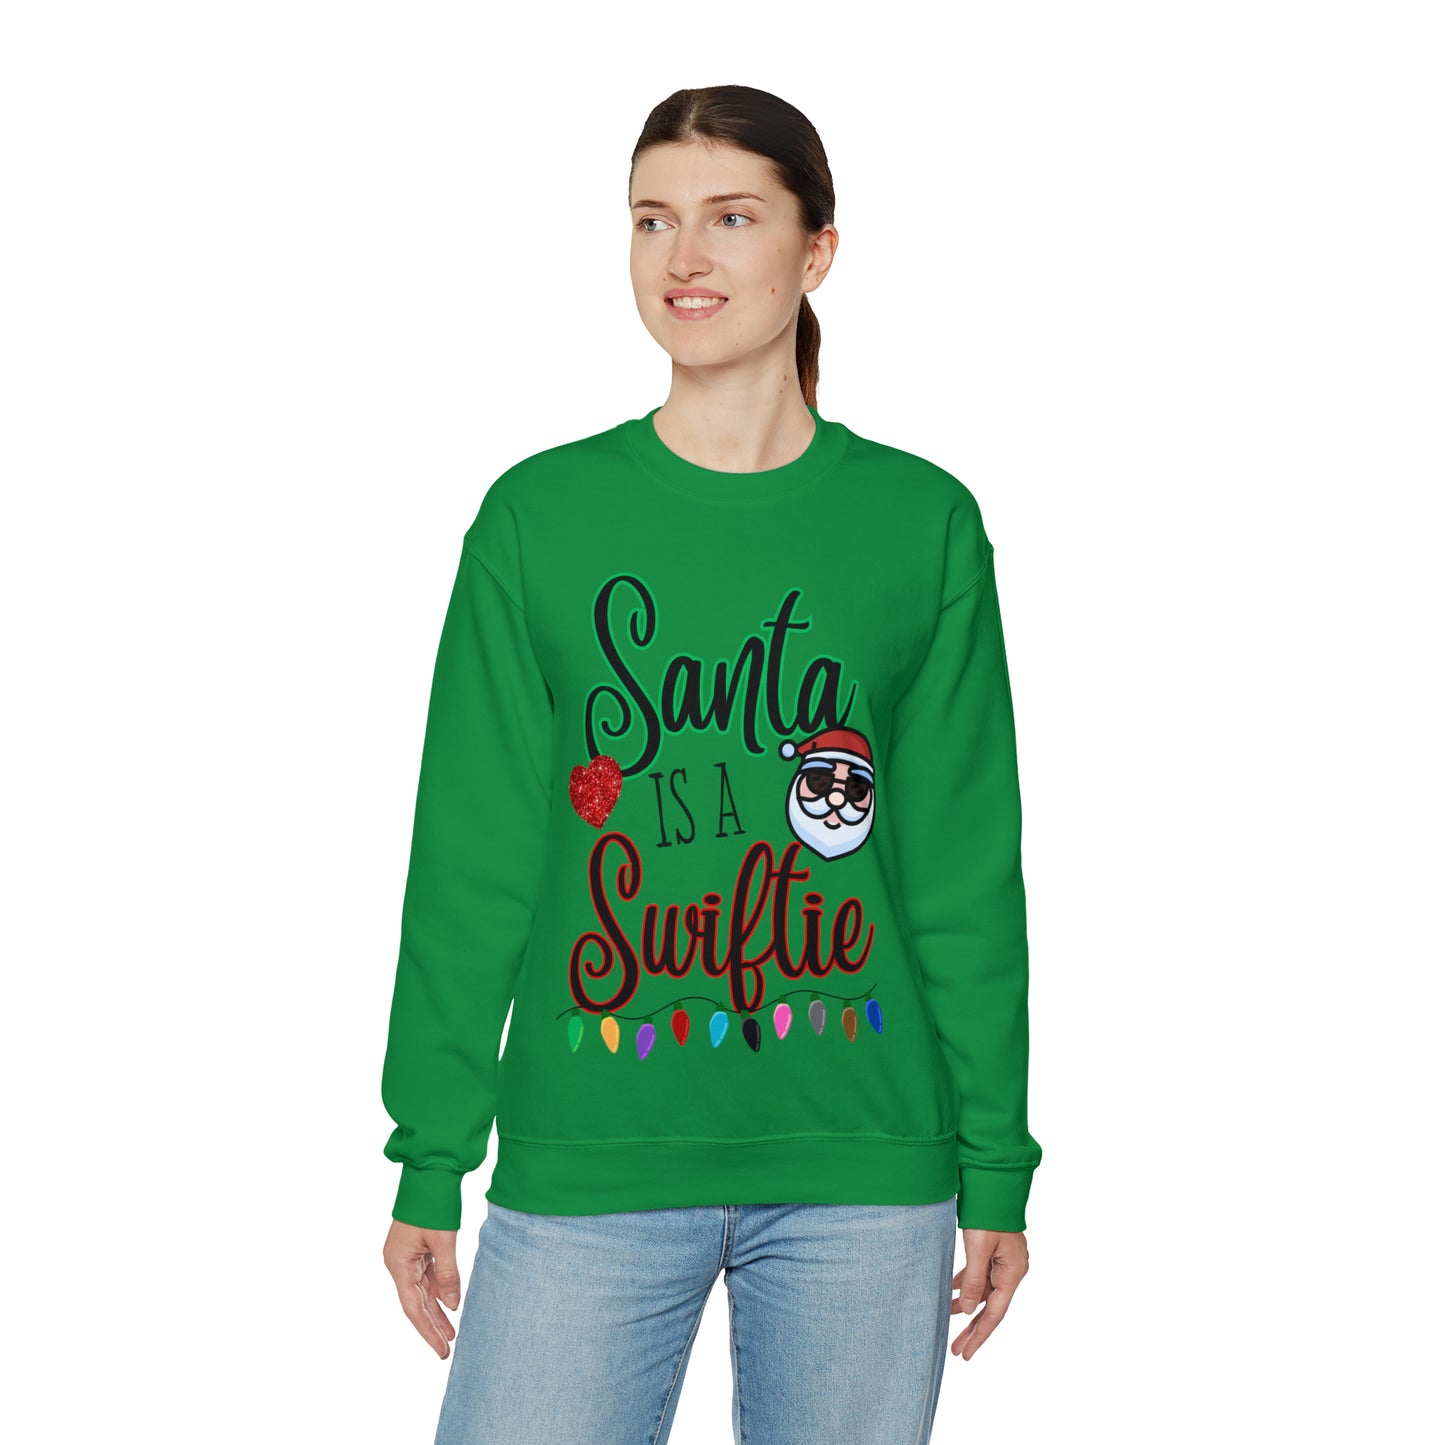 Santa is a Swiftie Unisex Crewneck Sweatshirt, Swiftie Taylor Swift Shirt, Swiftie Christmas Gift